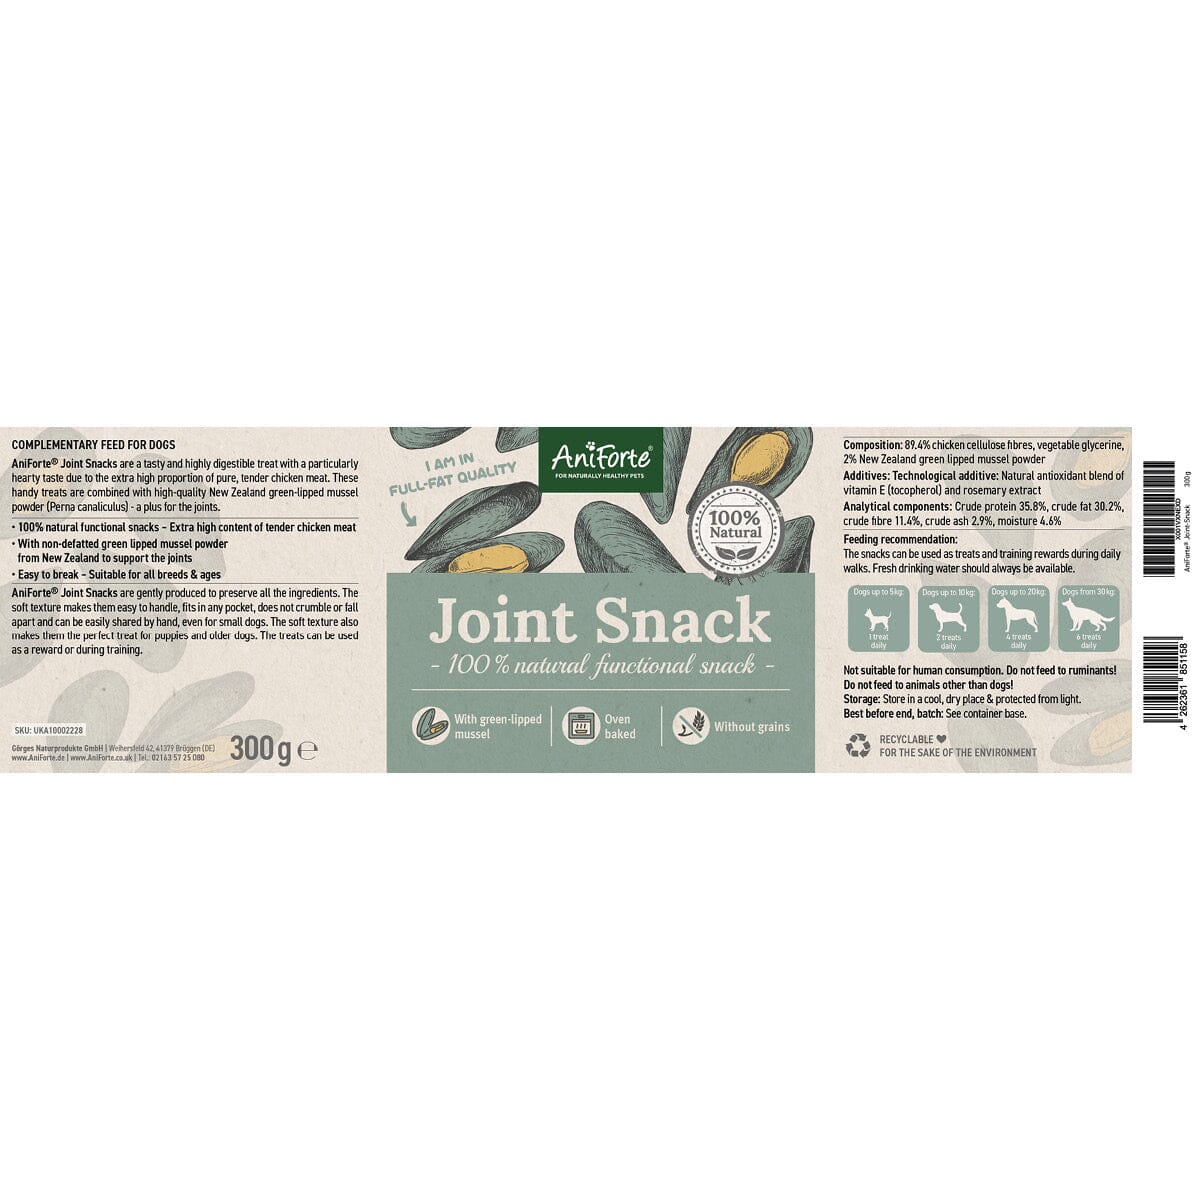 Joint Snack - AniForte UK